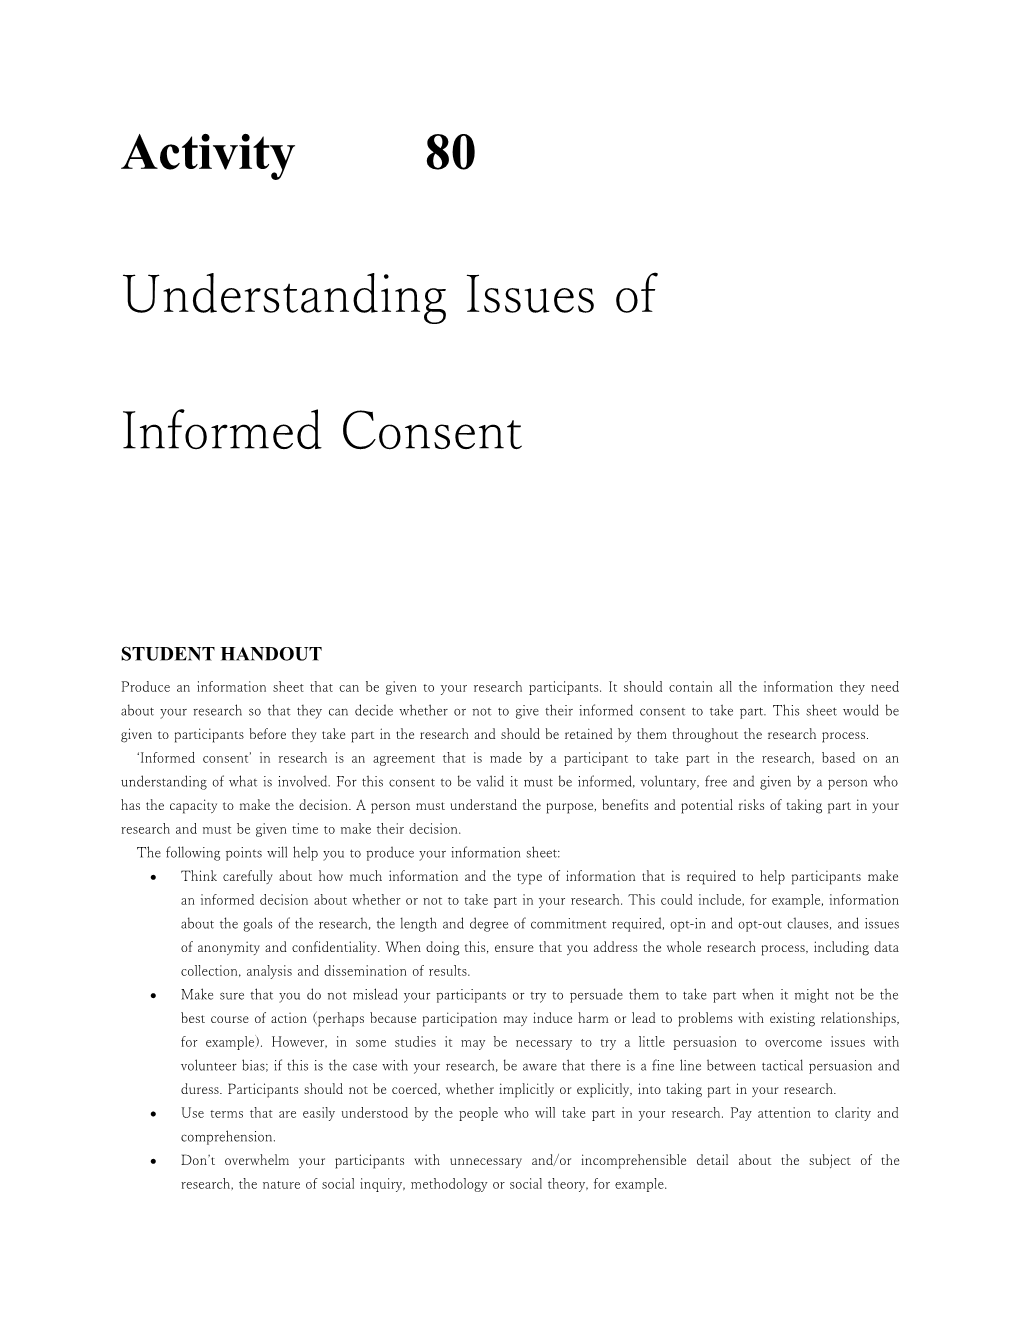 Understanding Issues of Informed Consent